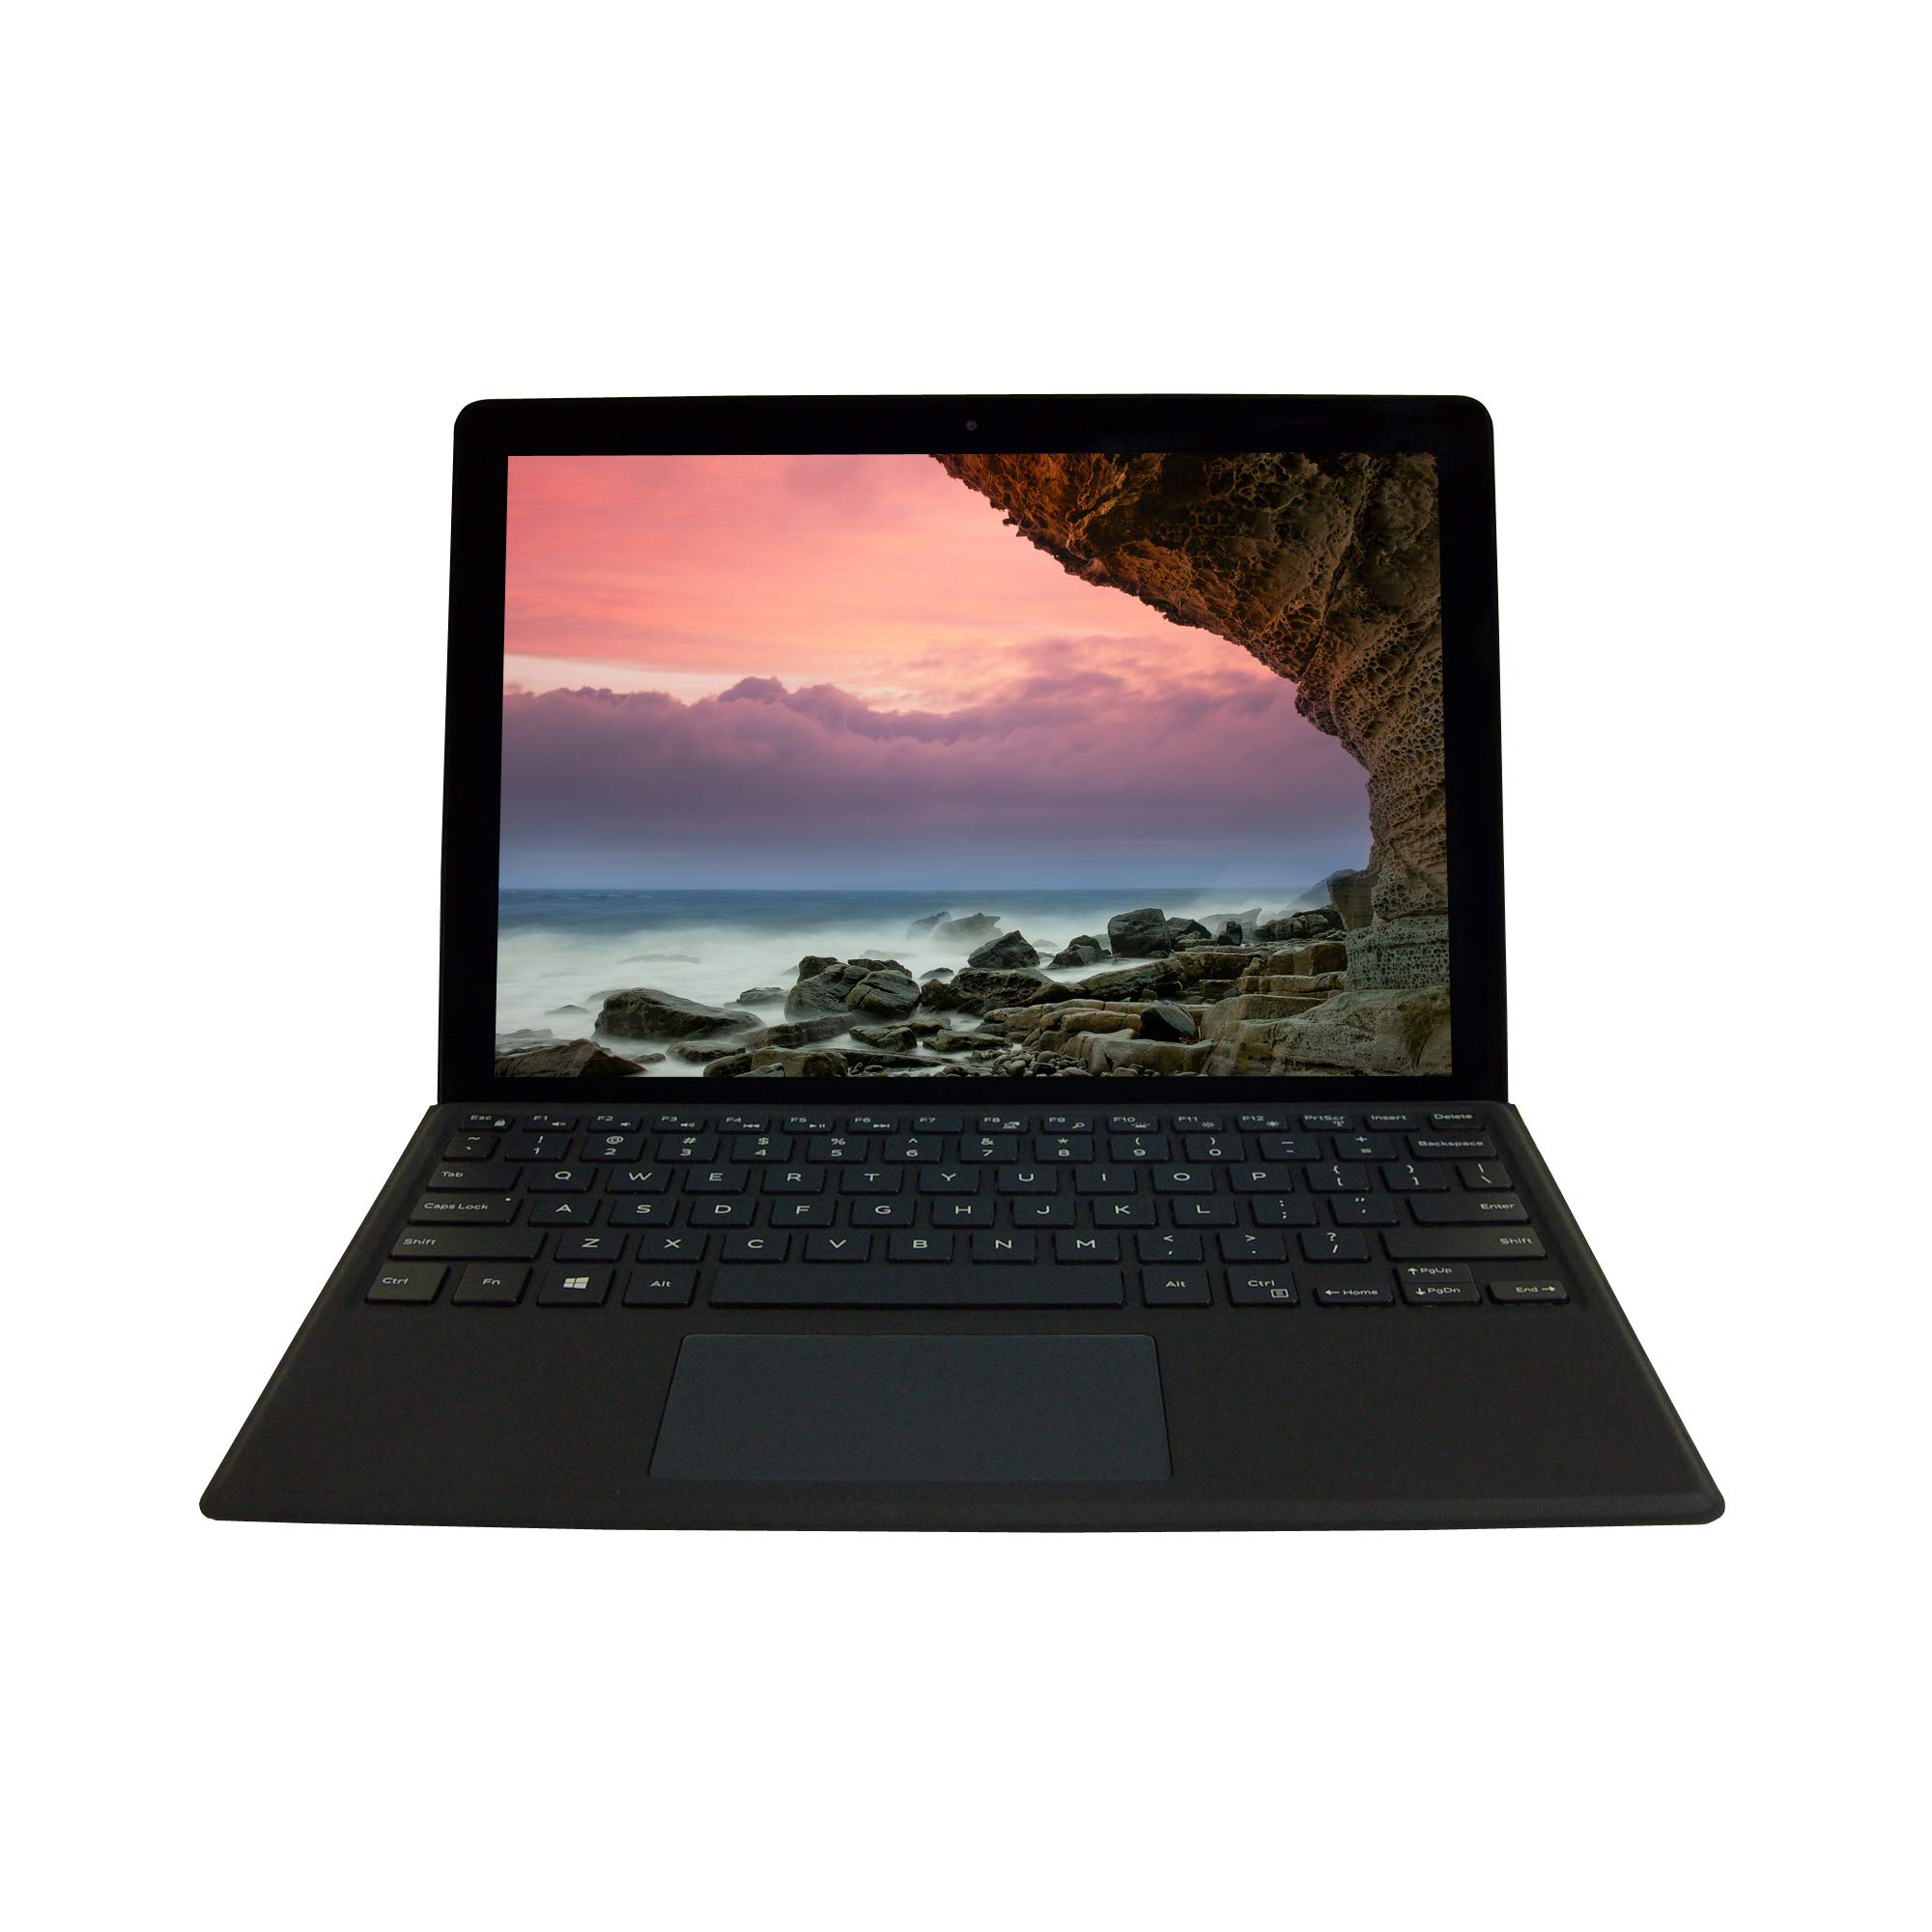 Dell Latitude 5285 Tablet 2-in-1 PC, Intel Core i7-7600U Processor, 16 GB Ram, 256 GB SSD, WiFi & Bluetooth, USB 3.1 Gen 1, Type C Port, CAM, Touch, Windows 10 Pro (Renewed)